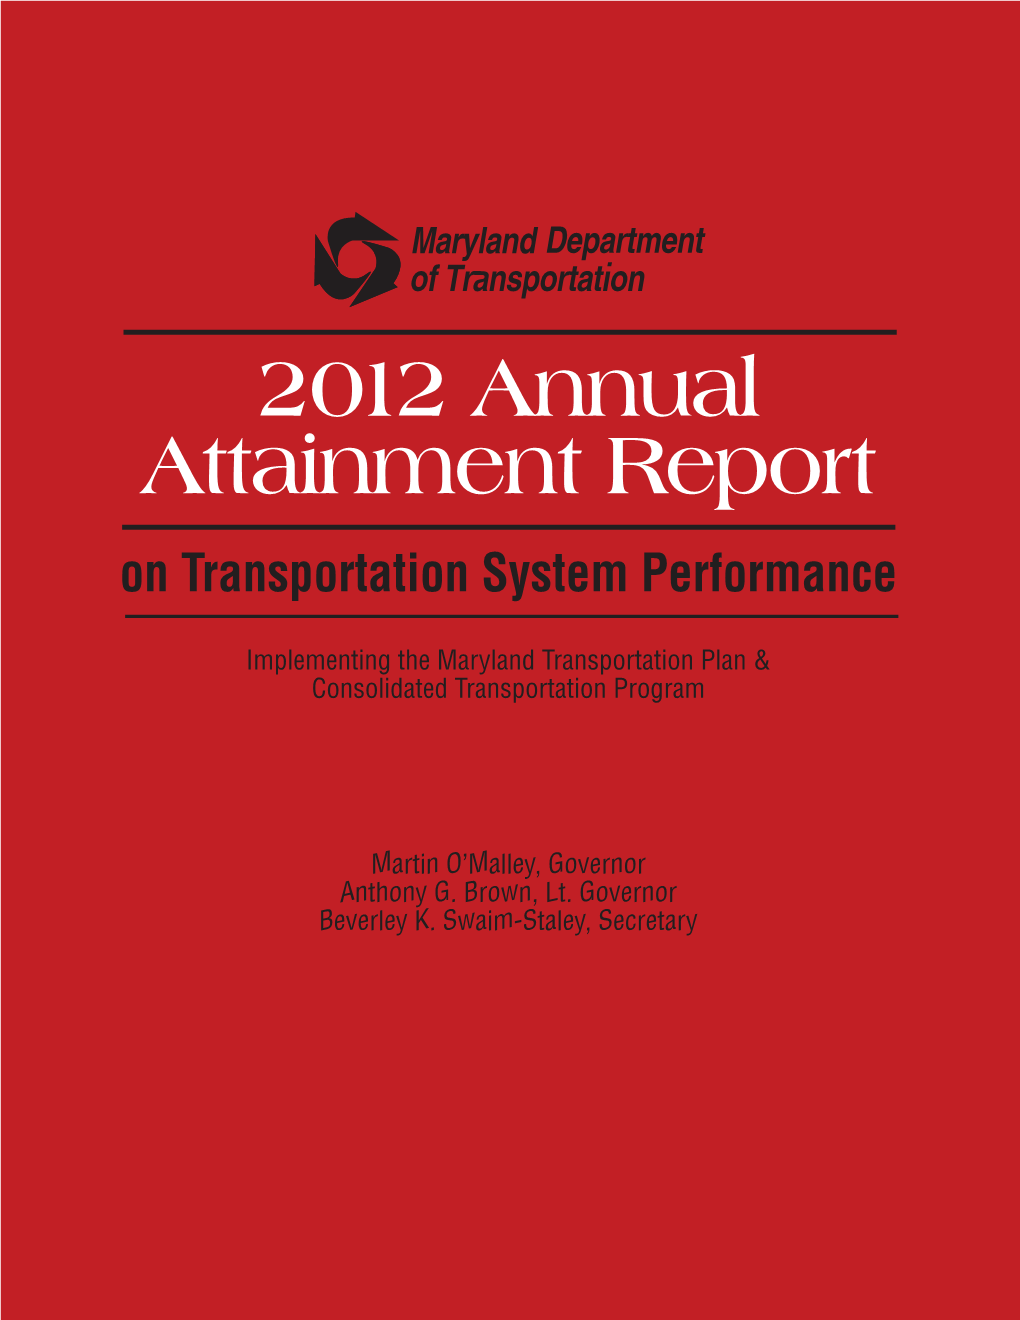 2012 Attainment Report